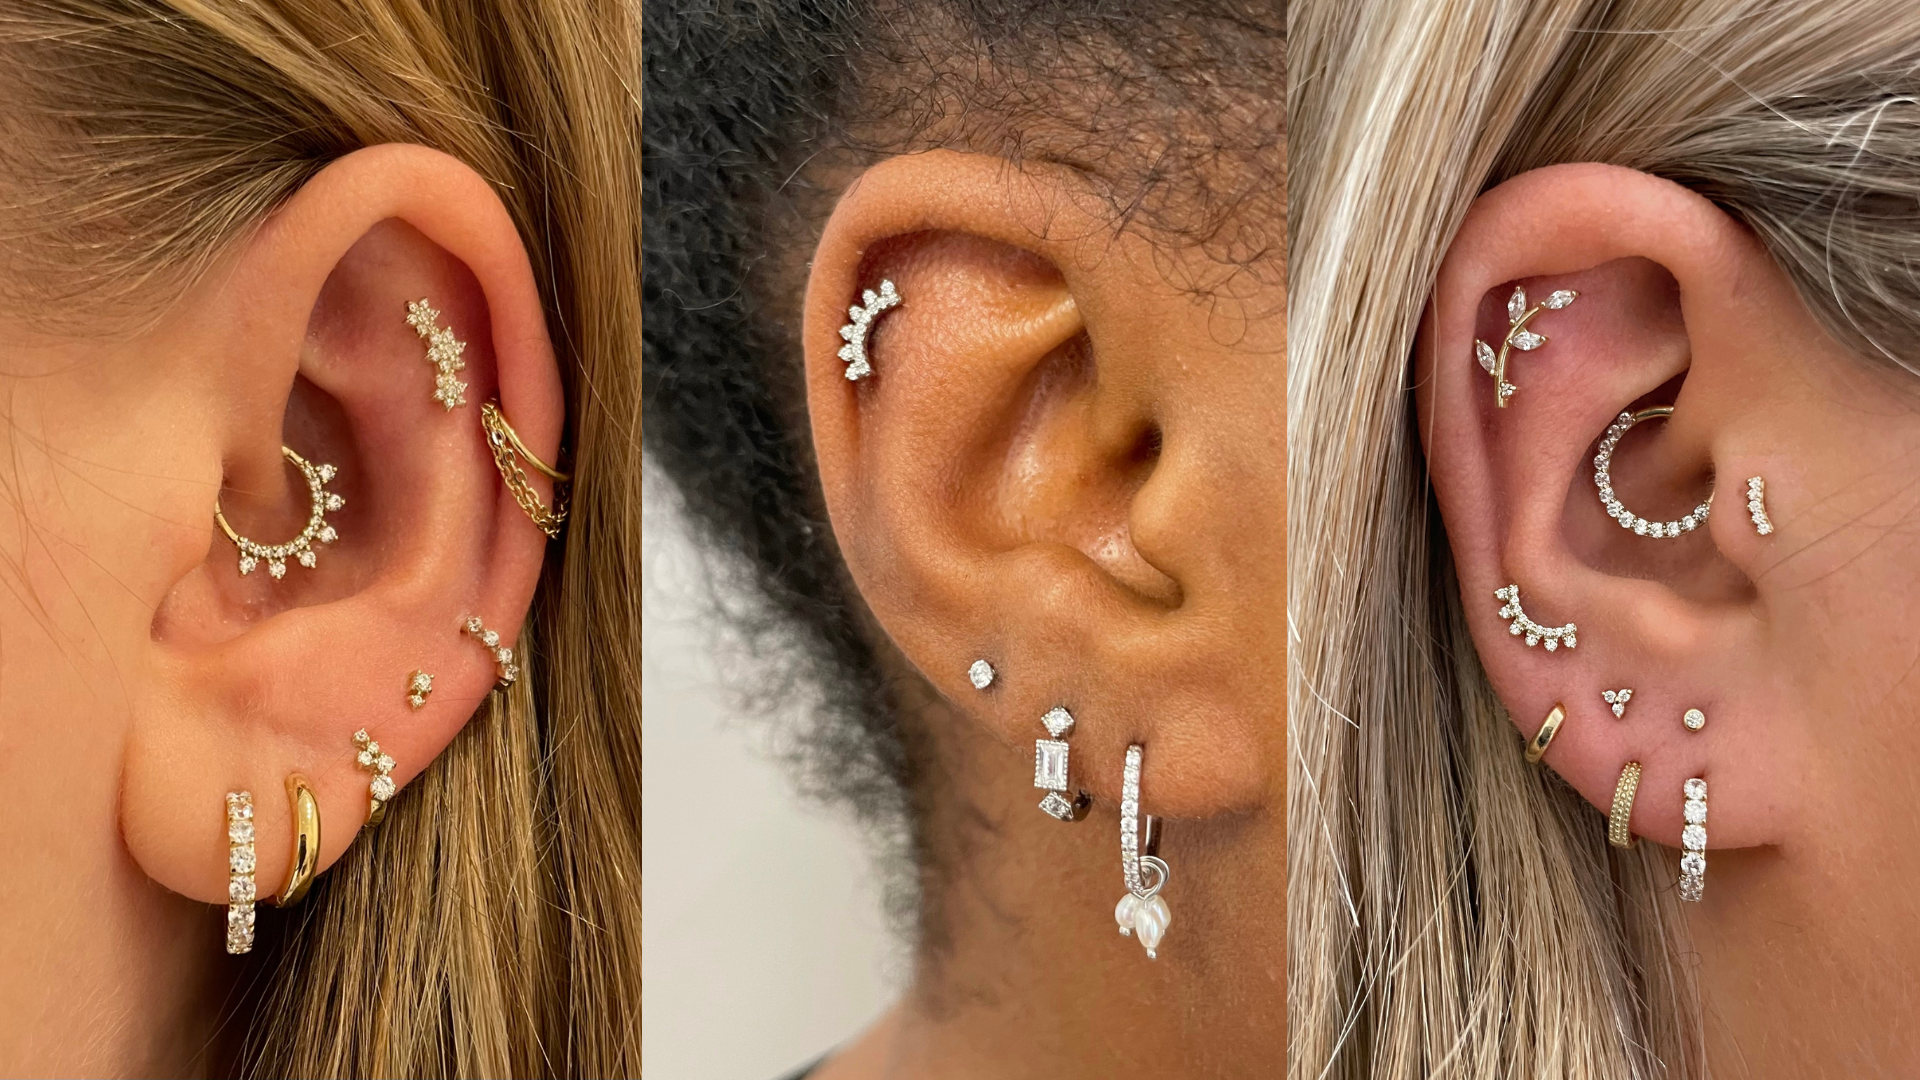 Starose 2pcs Top 2.0mm Circle Ear Ring Buckle Hoop Earrings Women Men Helix  Piercing Tragus Cartilage Lobe Piercing Belly Rings